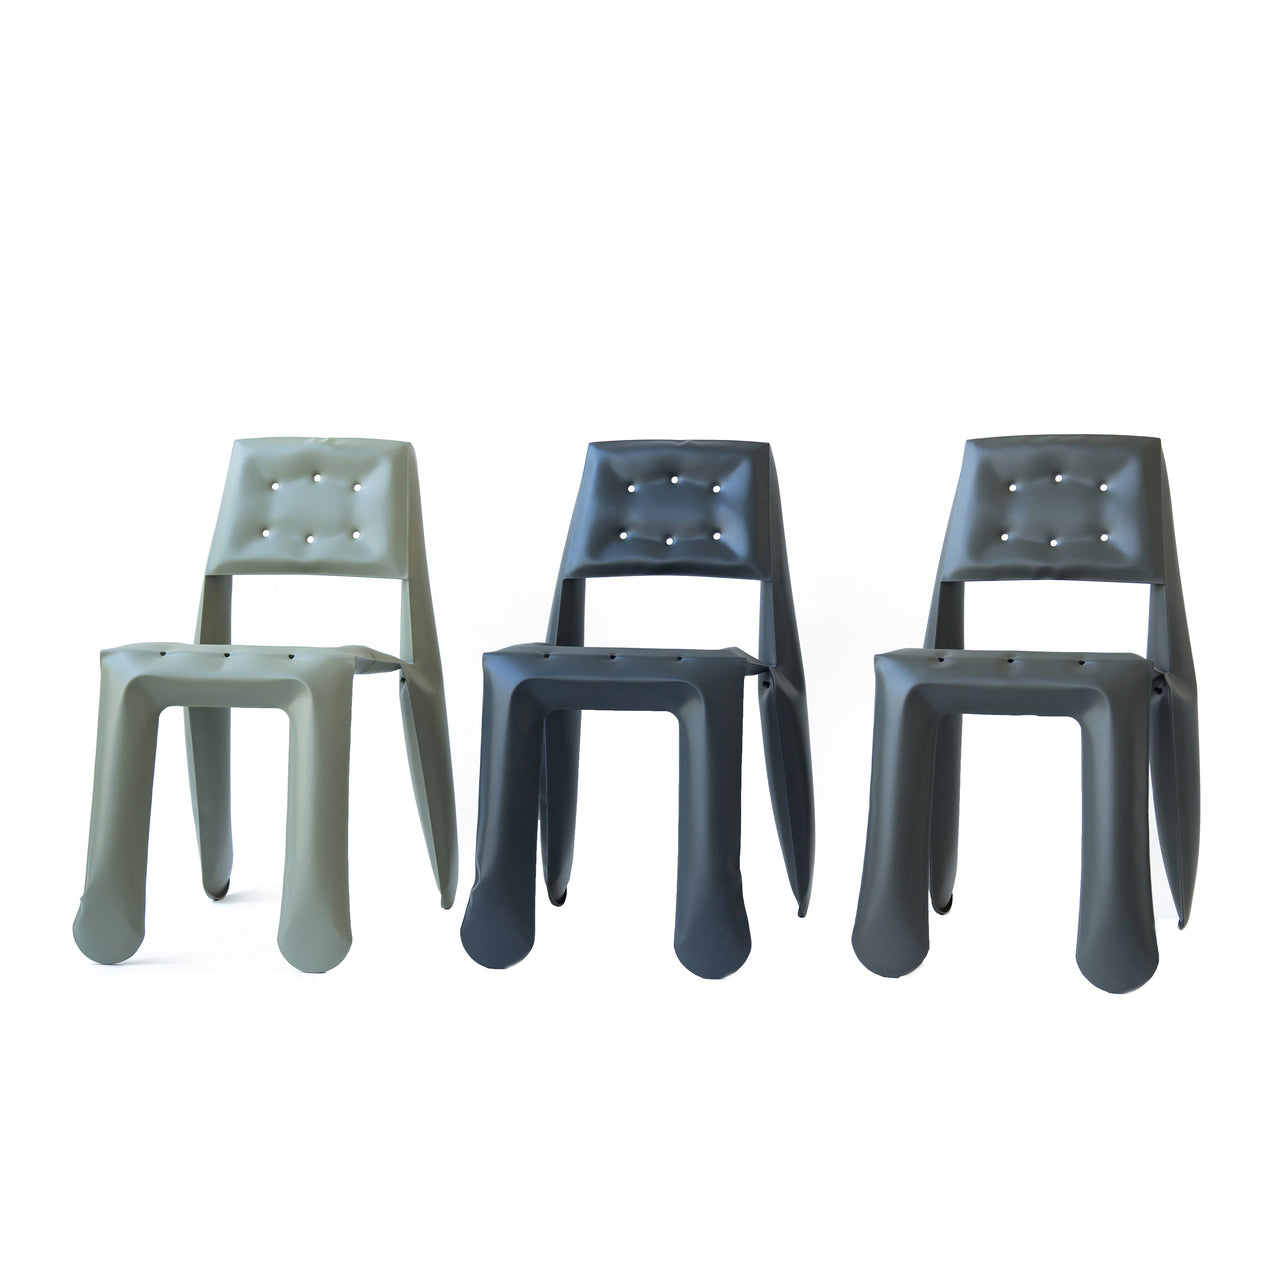 Chippensteel 0.5 Chair: Moss Grey Aluminum + Graphite Grey Aluminum + Umbra Grey Aluminum